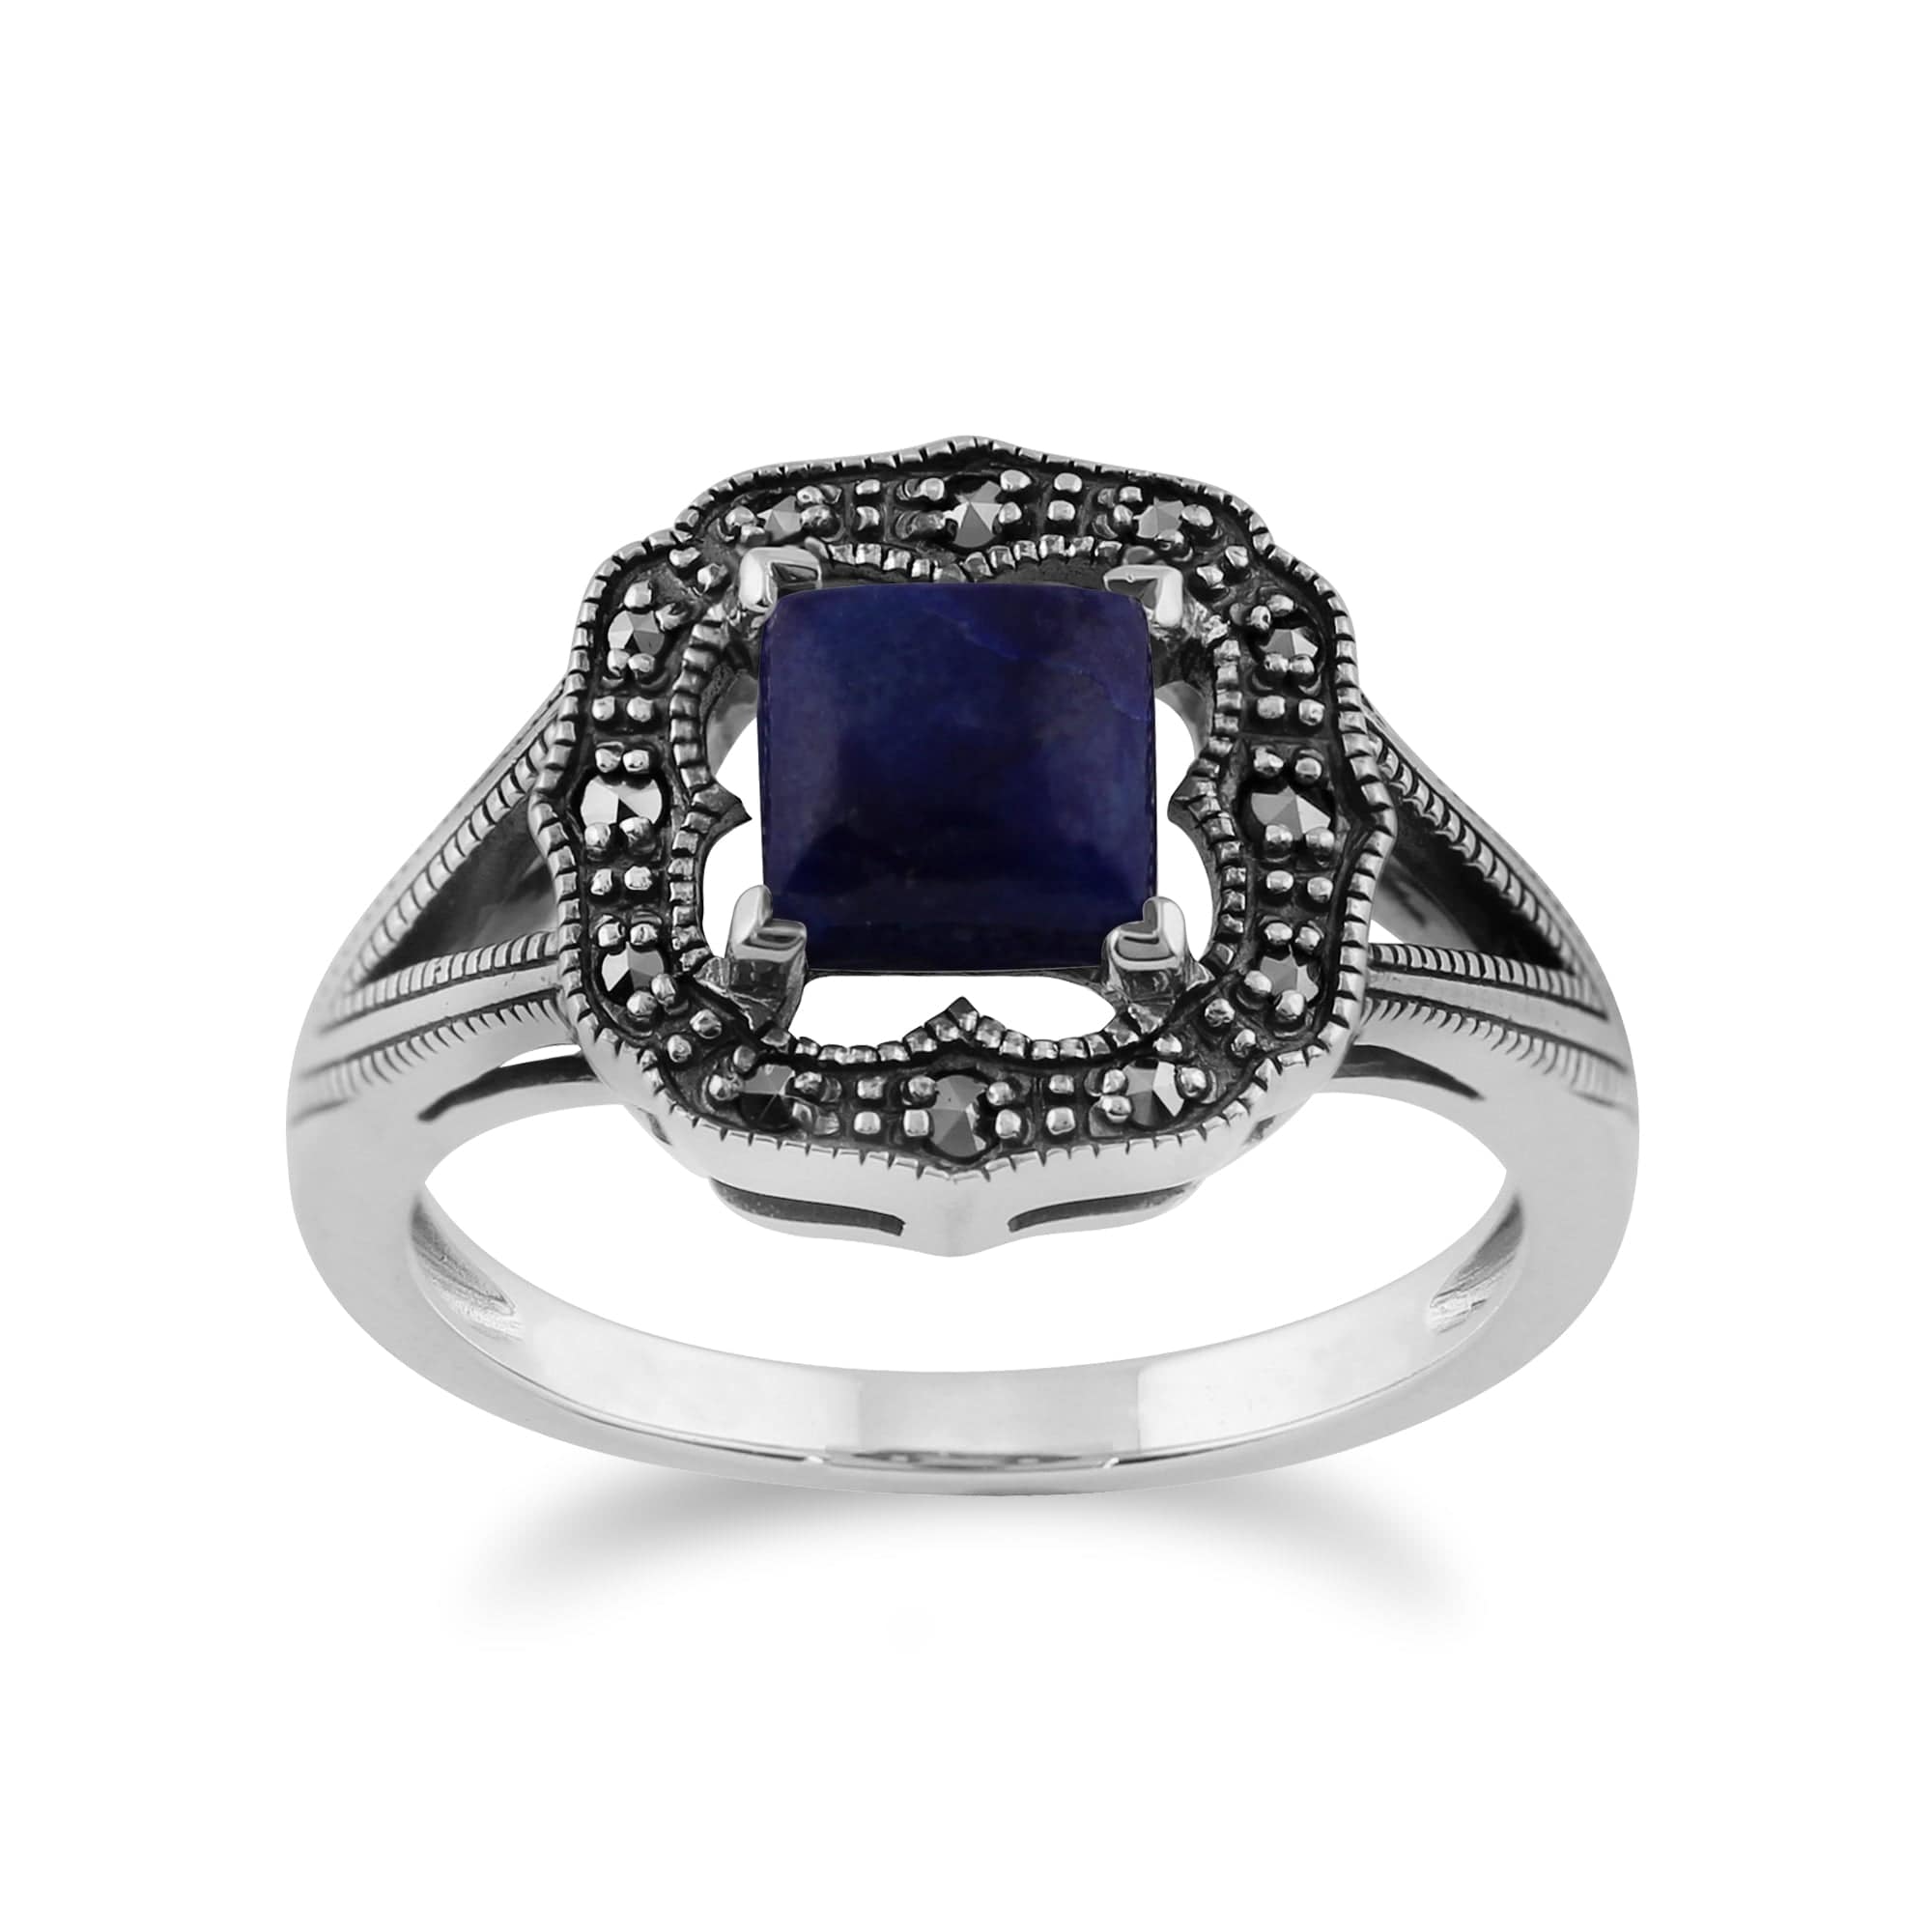 Gemondo 925 Sterling Silver 0.58ct Lapis Lazuli & Marcasite Art Deco Ring Image 1